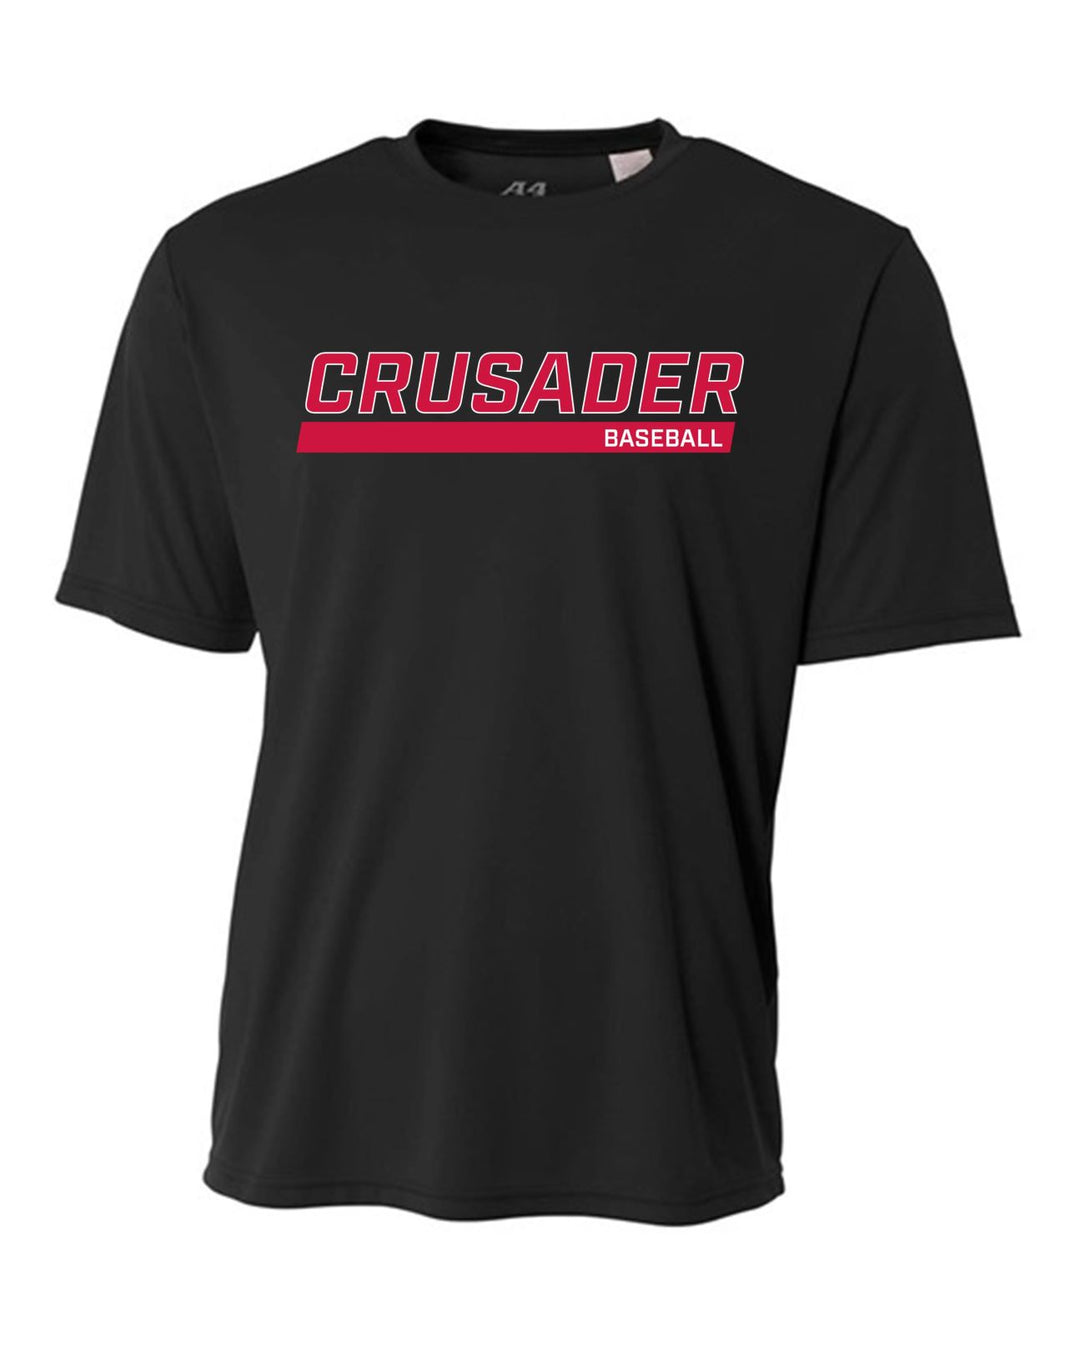 WCU Baseball Men's Short-Sleeve Performance Shirt WCU Baseball Black CRUSADER - Third Coast Soccer